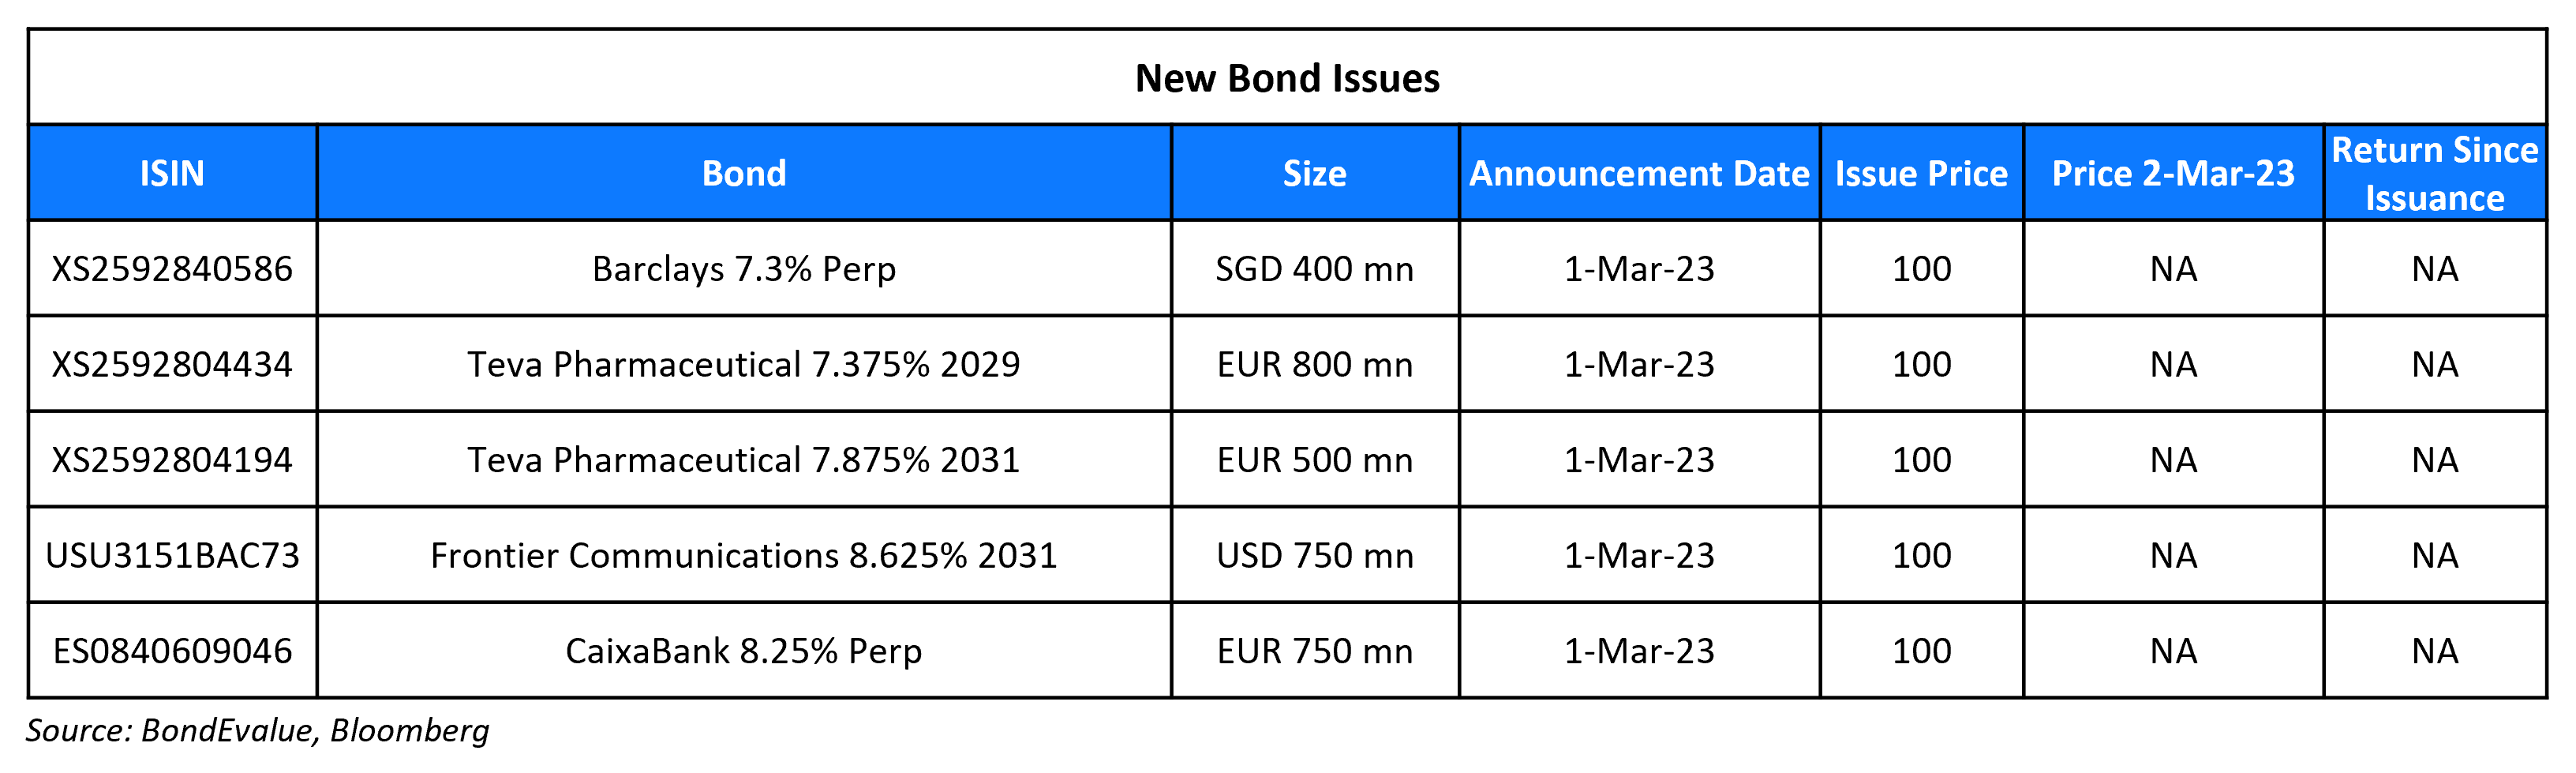 New Bond Issues 2 Mar 23